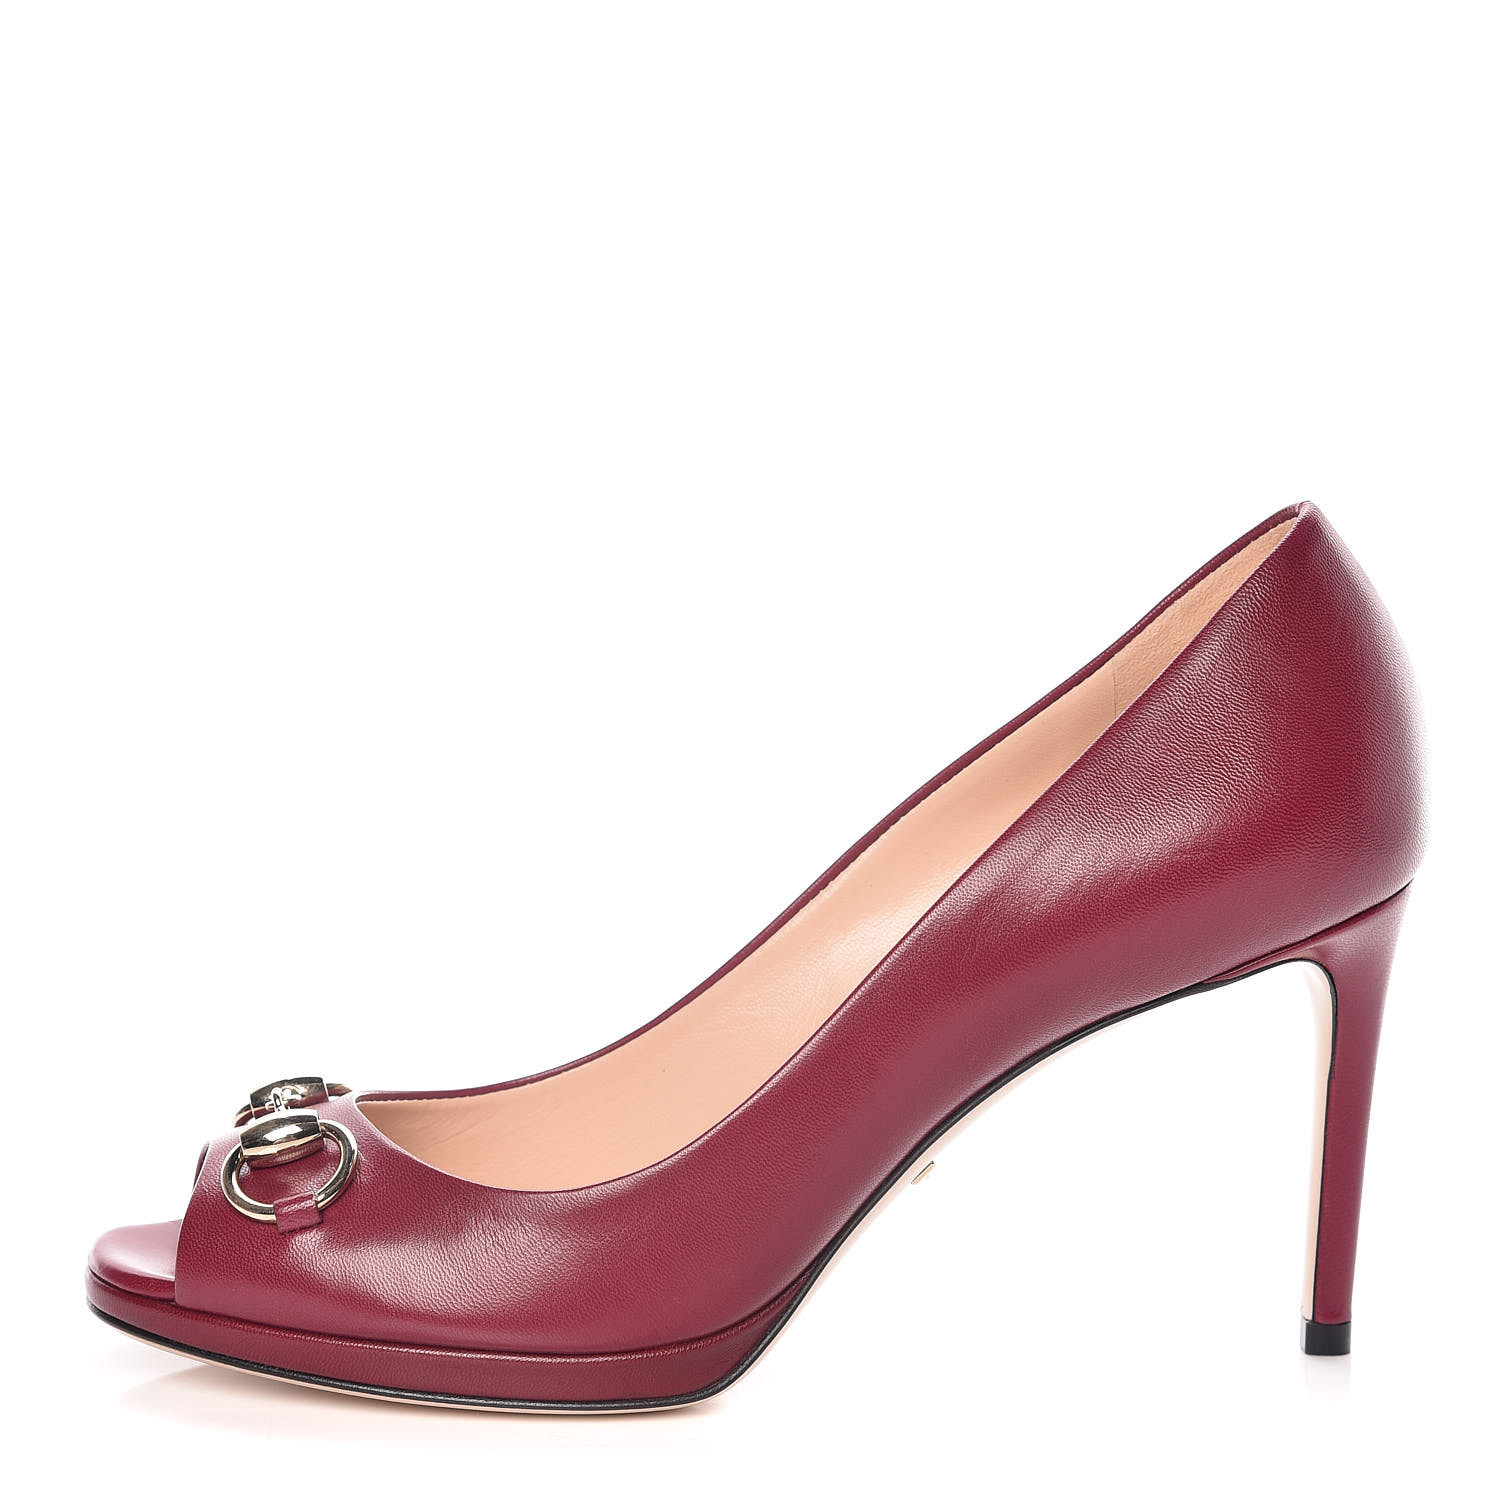 raspberry colored heels